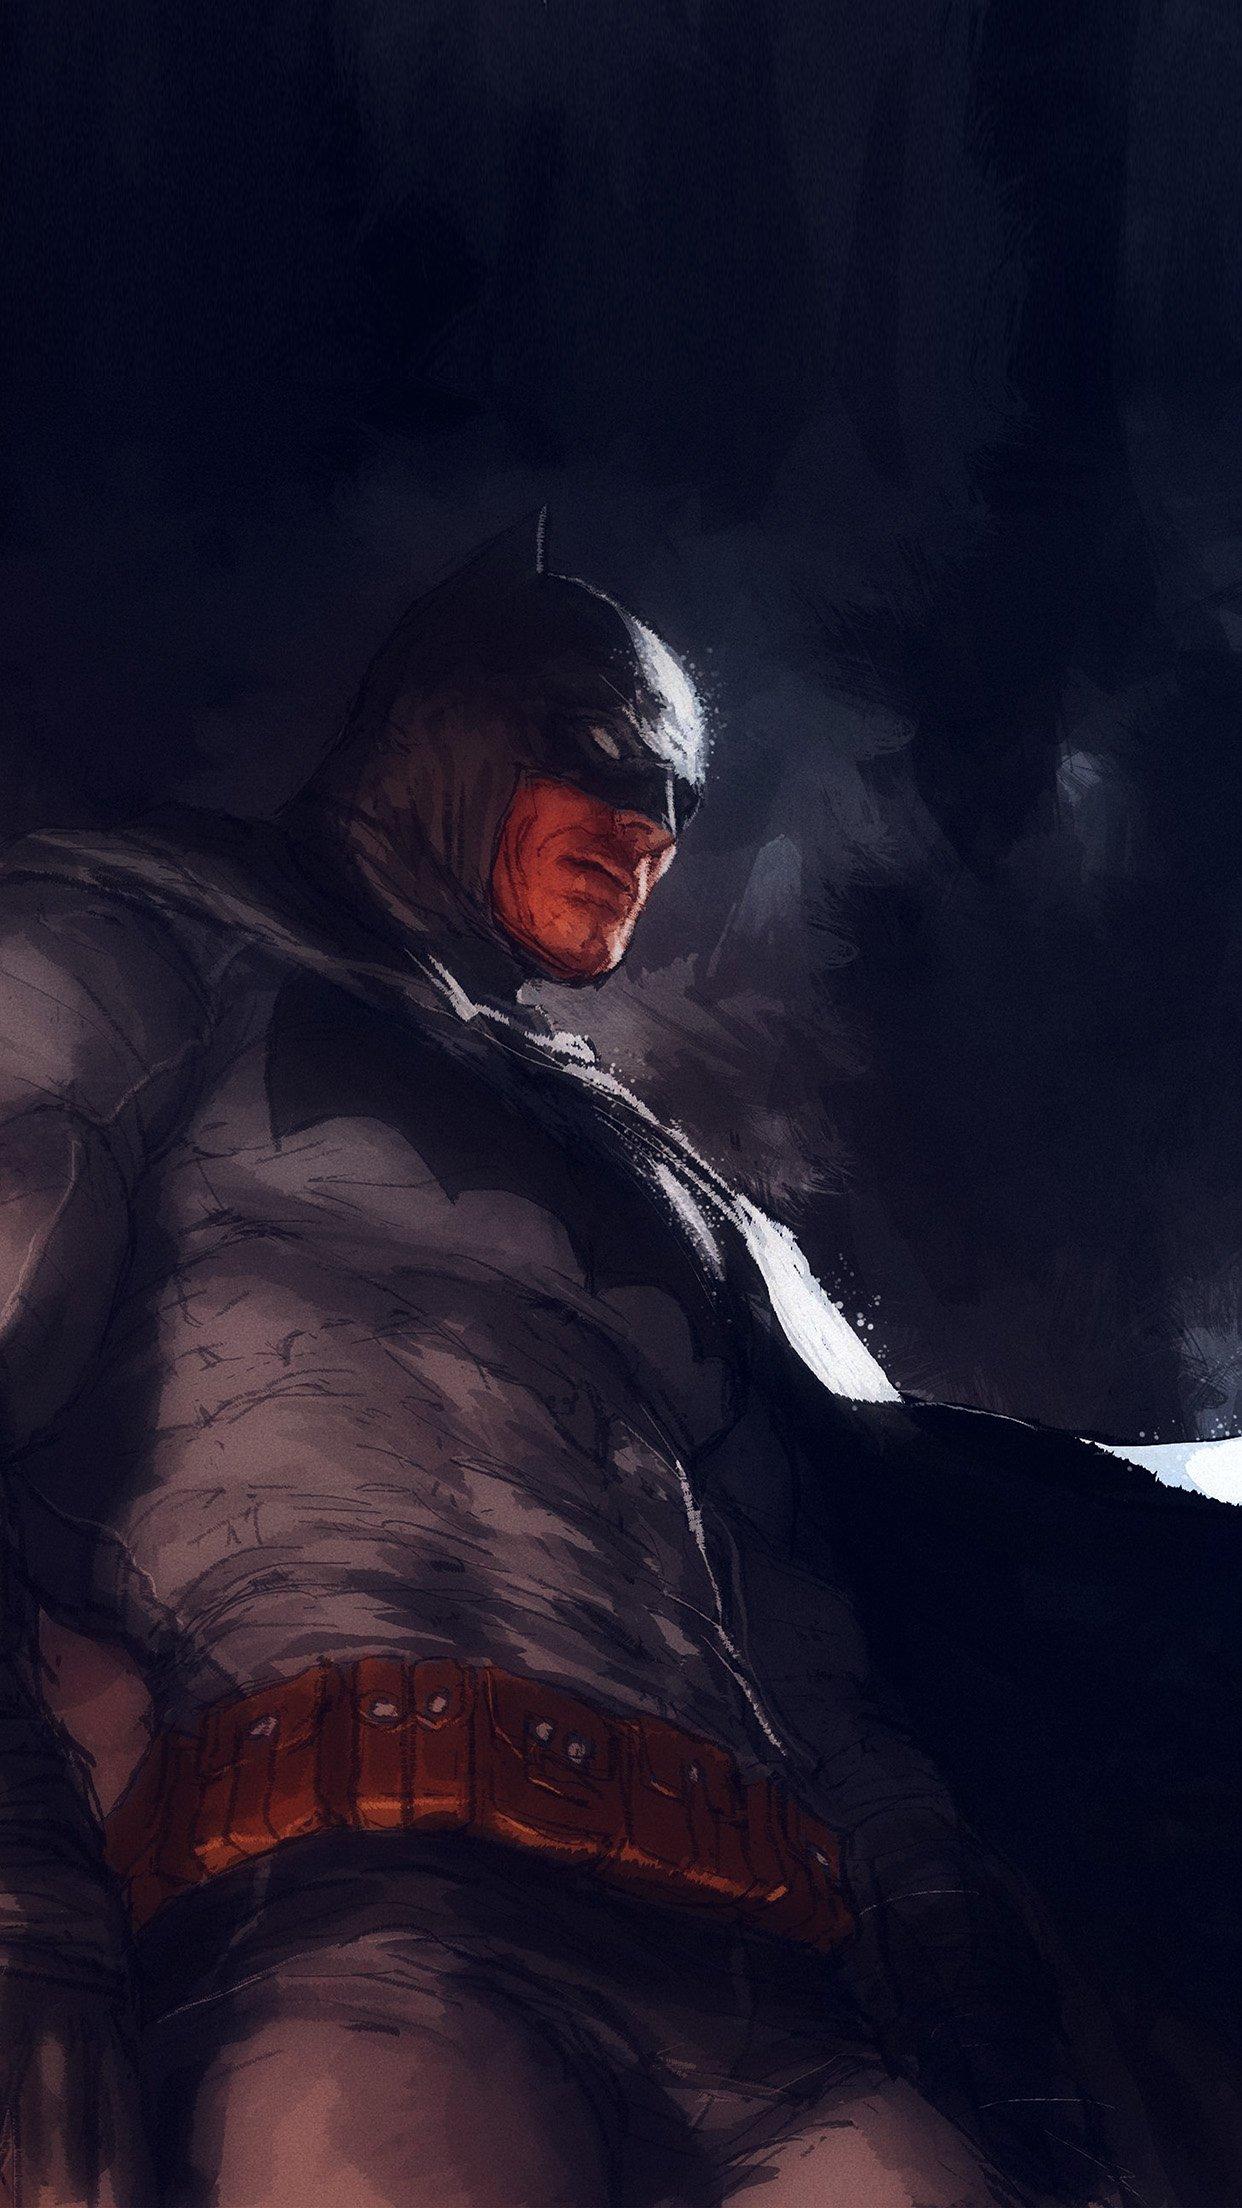 iPhone7 wallpaper. batman art illustration